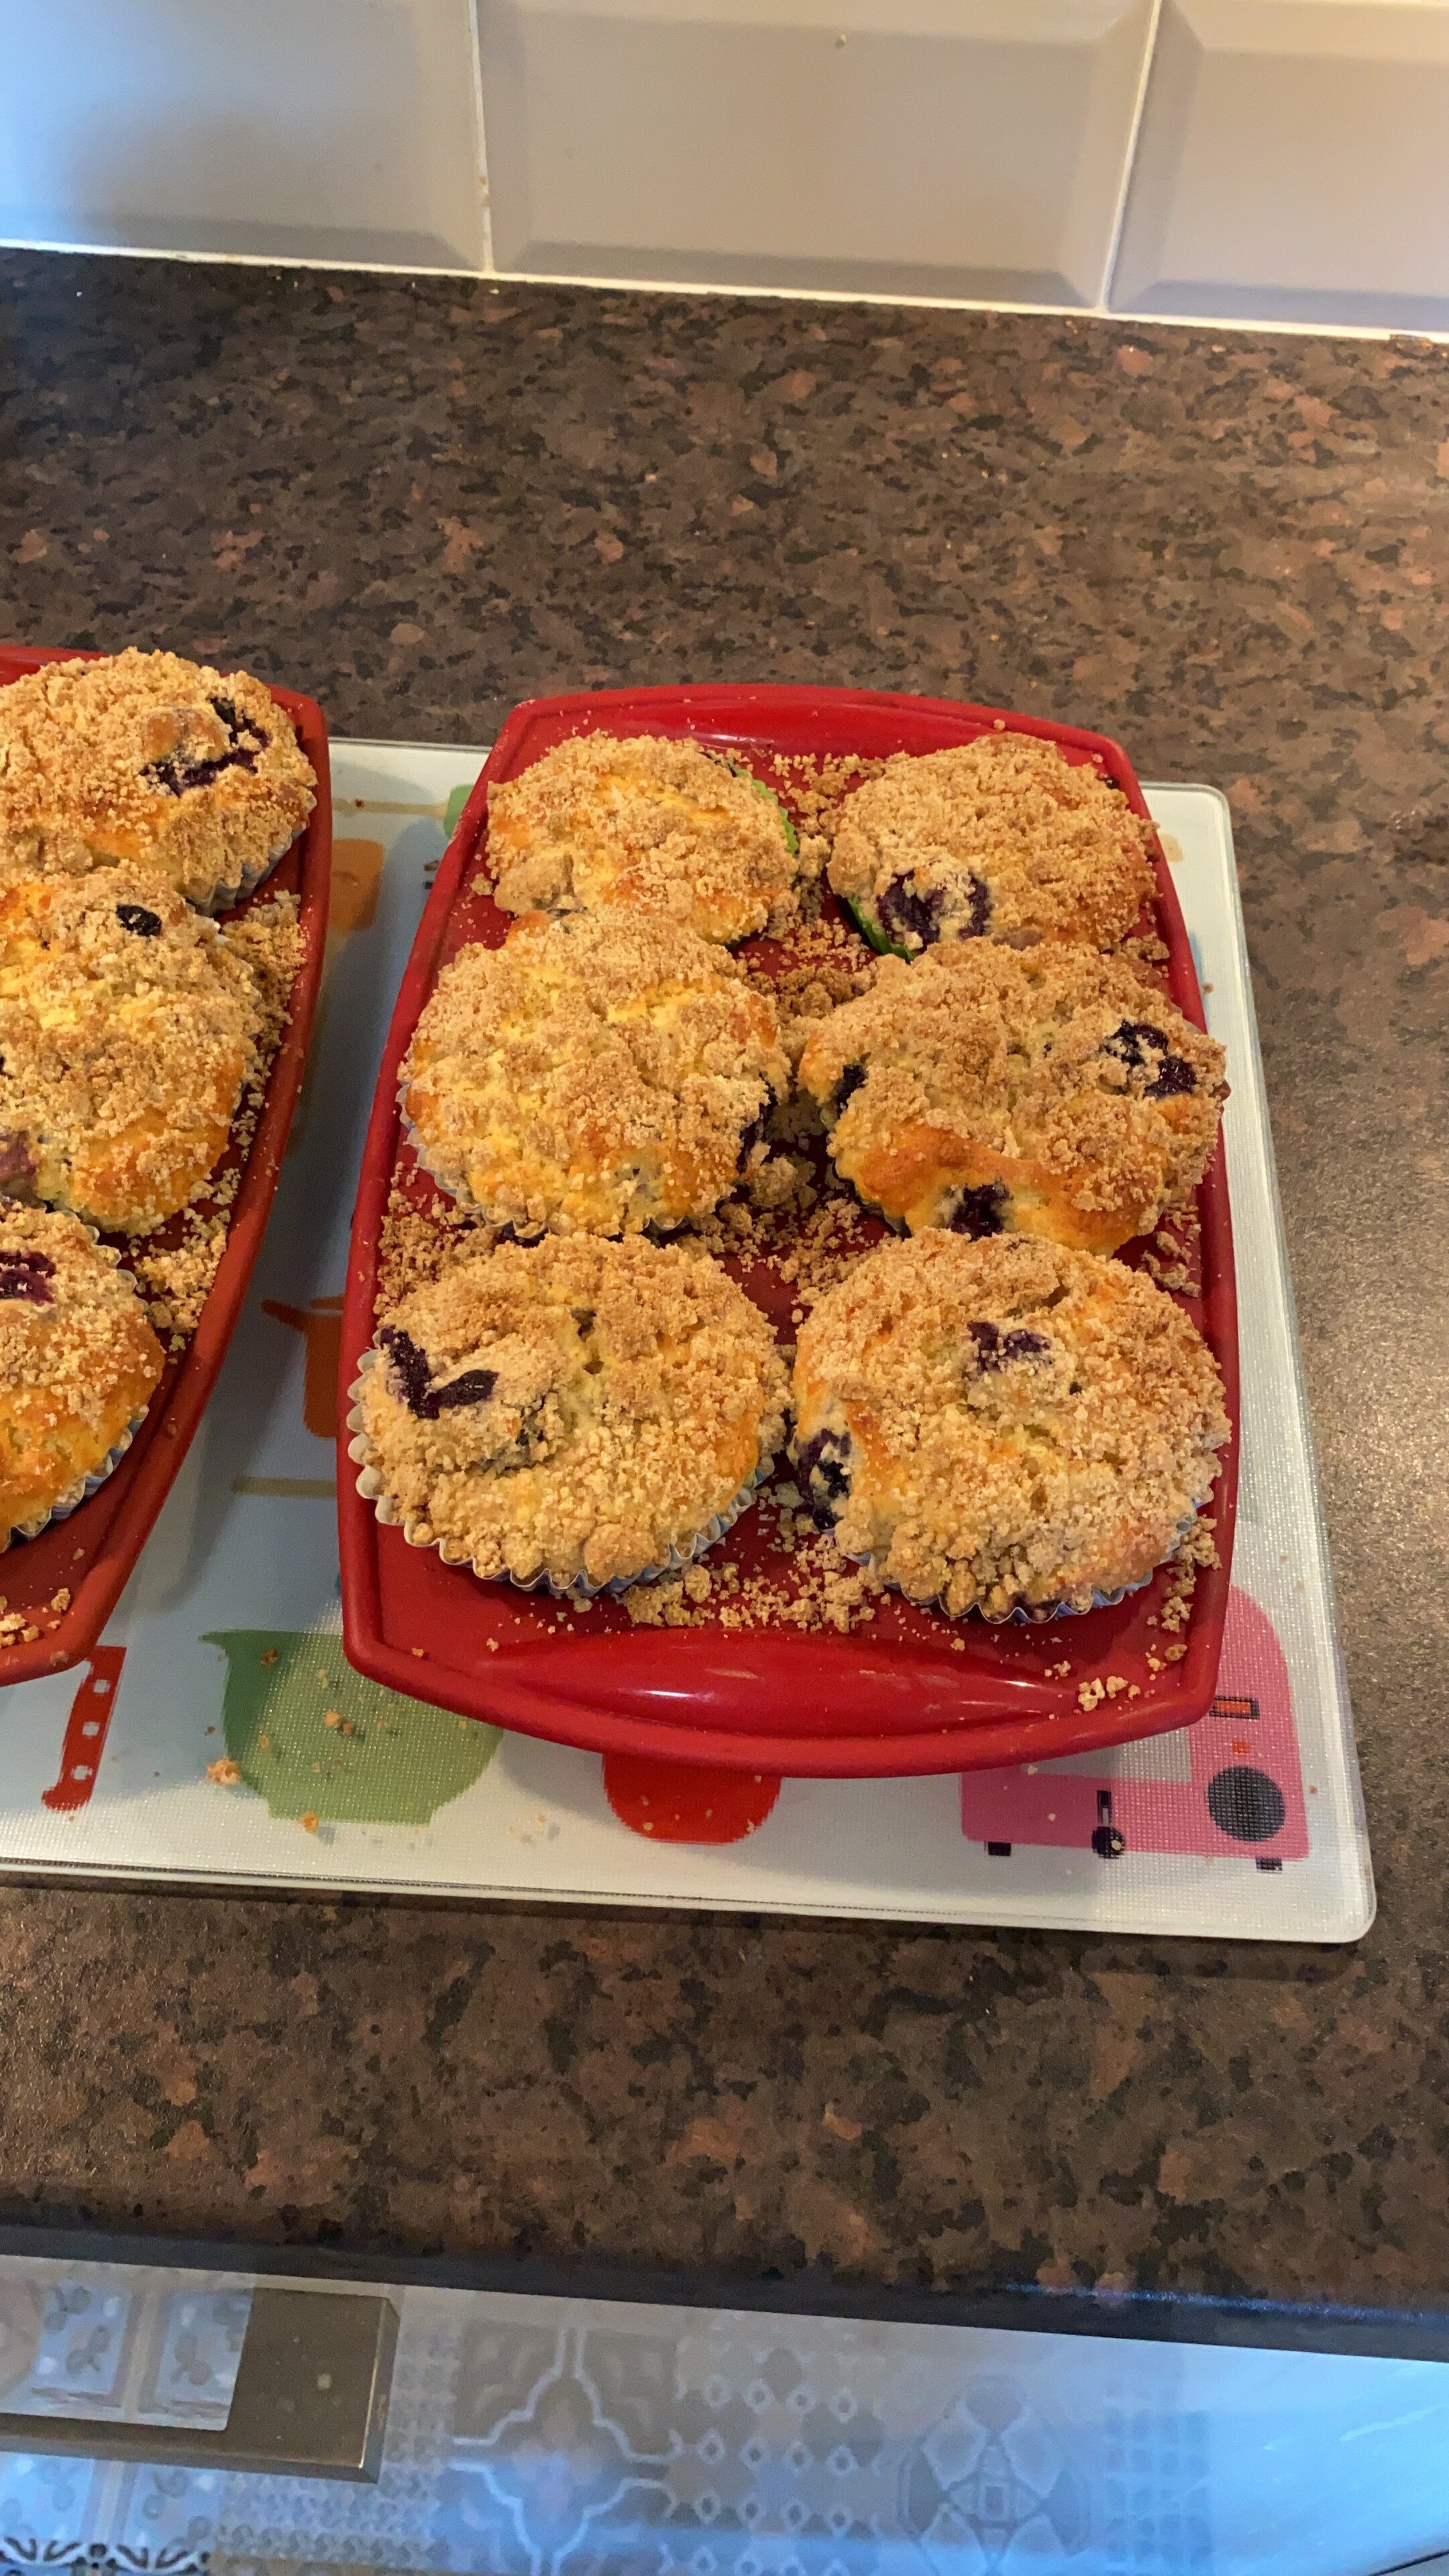 Week 9: Ina Garten's Blueberry and Streusel Muffins